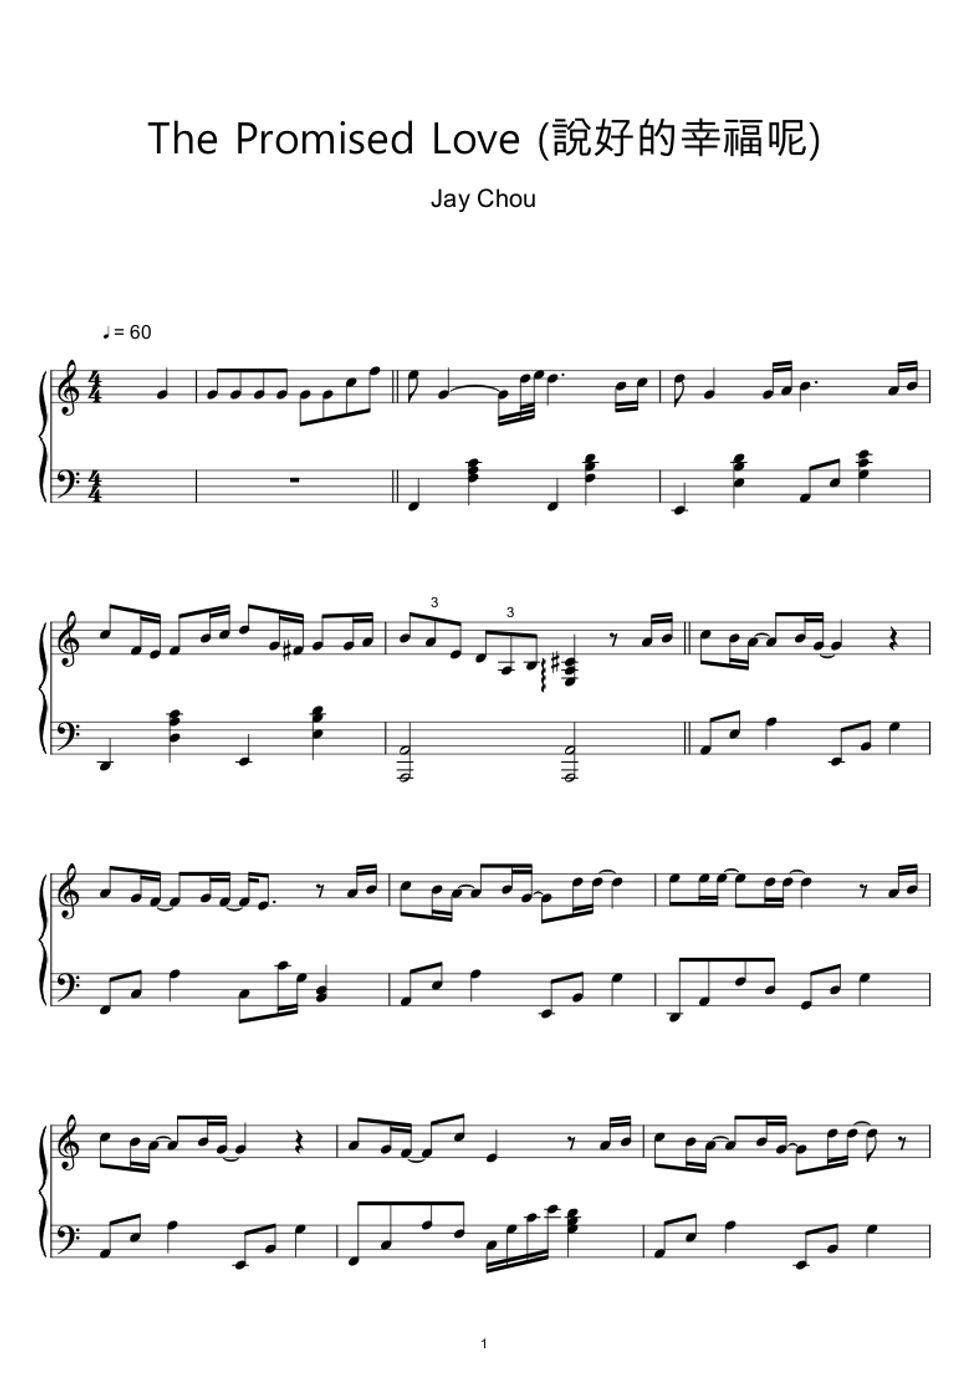 周杰倫 (Jay Chou) - 說好的幸福呢 (The Promised Love) (Sheet Music, MIDI,) by sayu